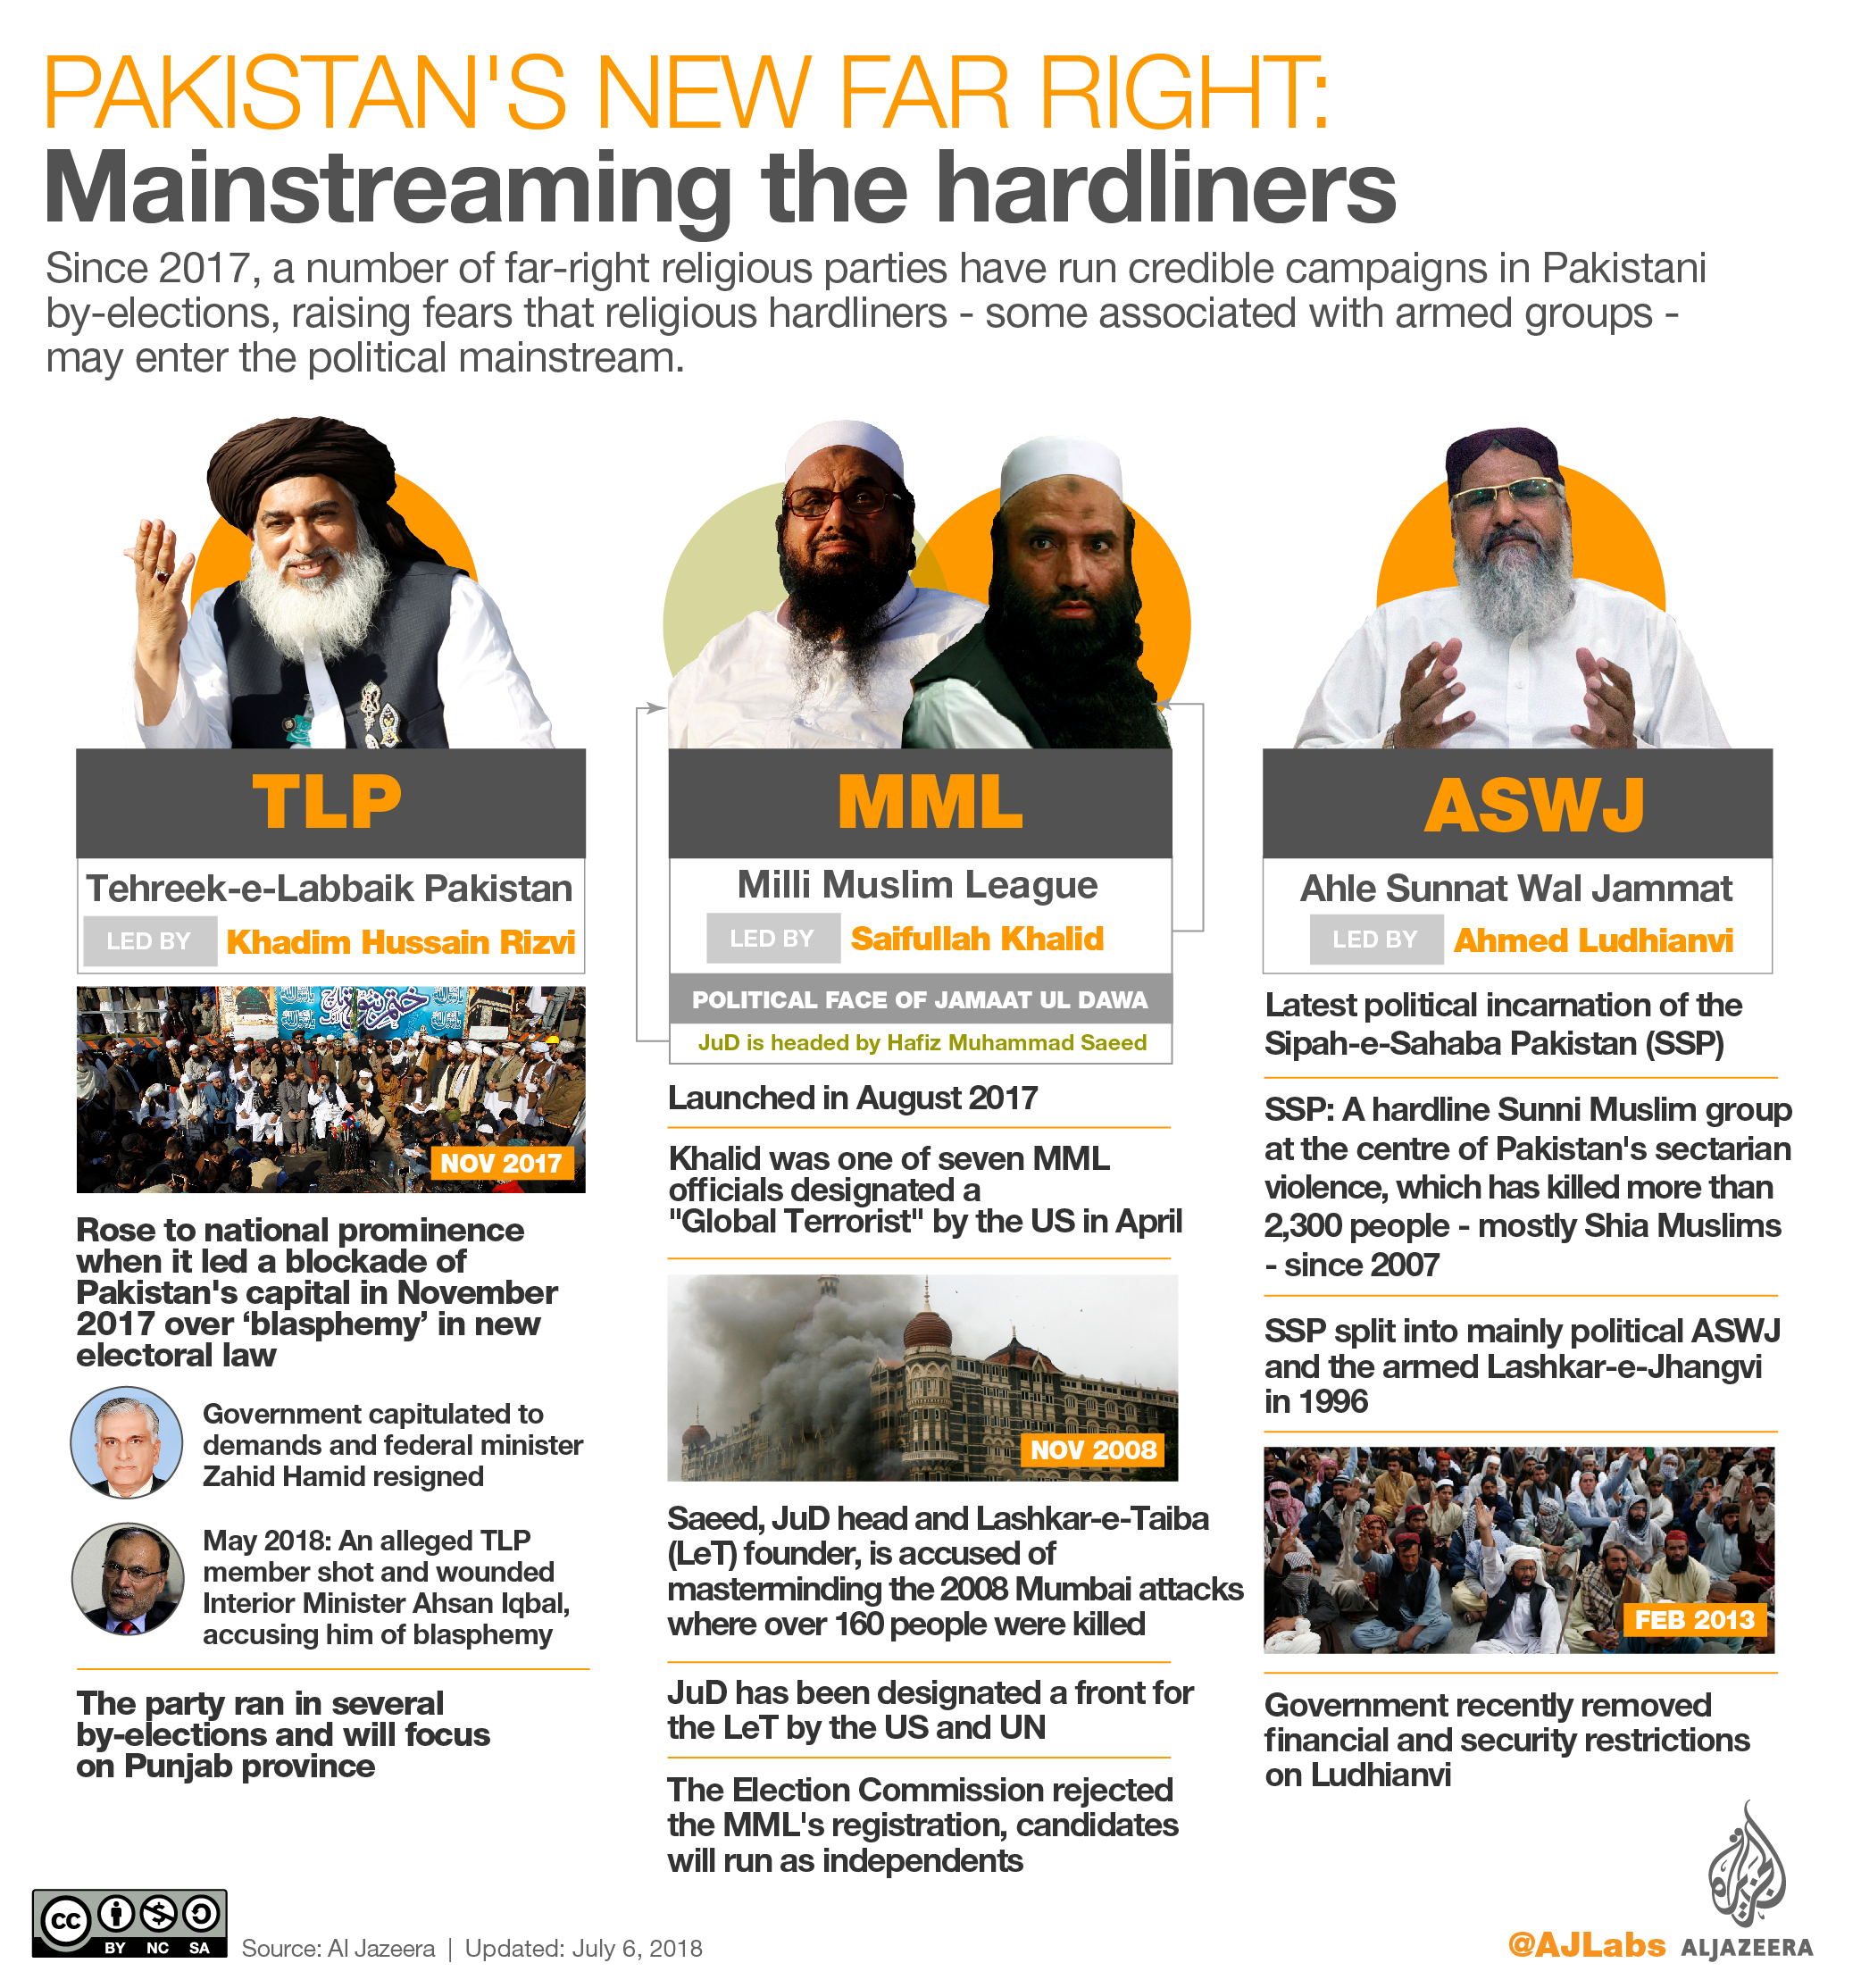 INTERACTIVE: Pakistan's new far right [Al Jazeera]